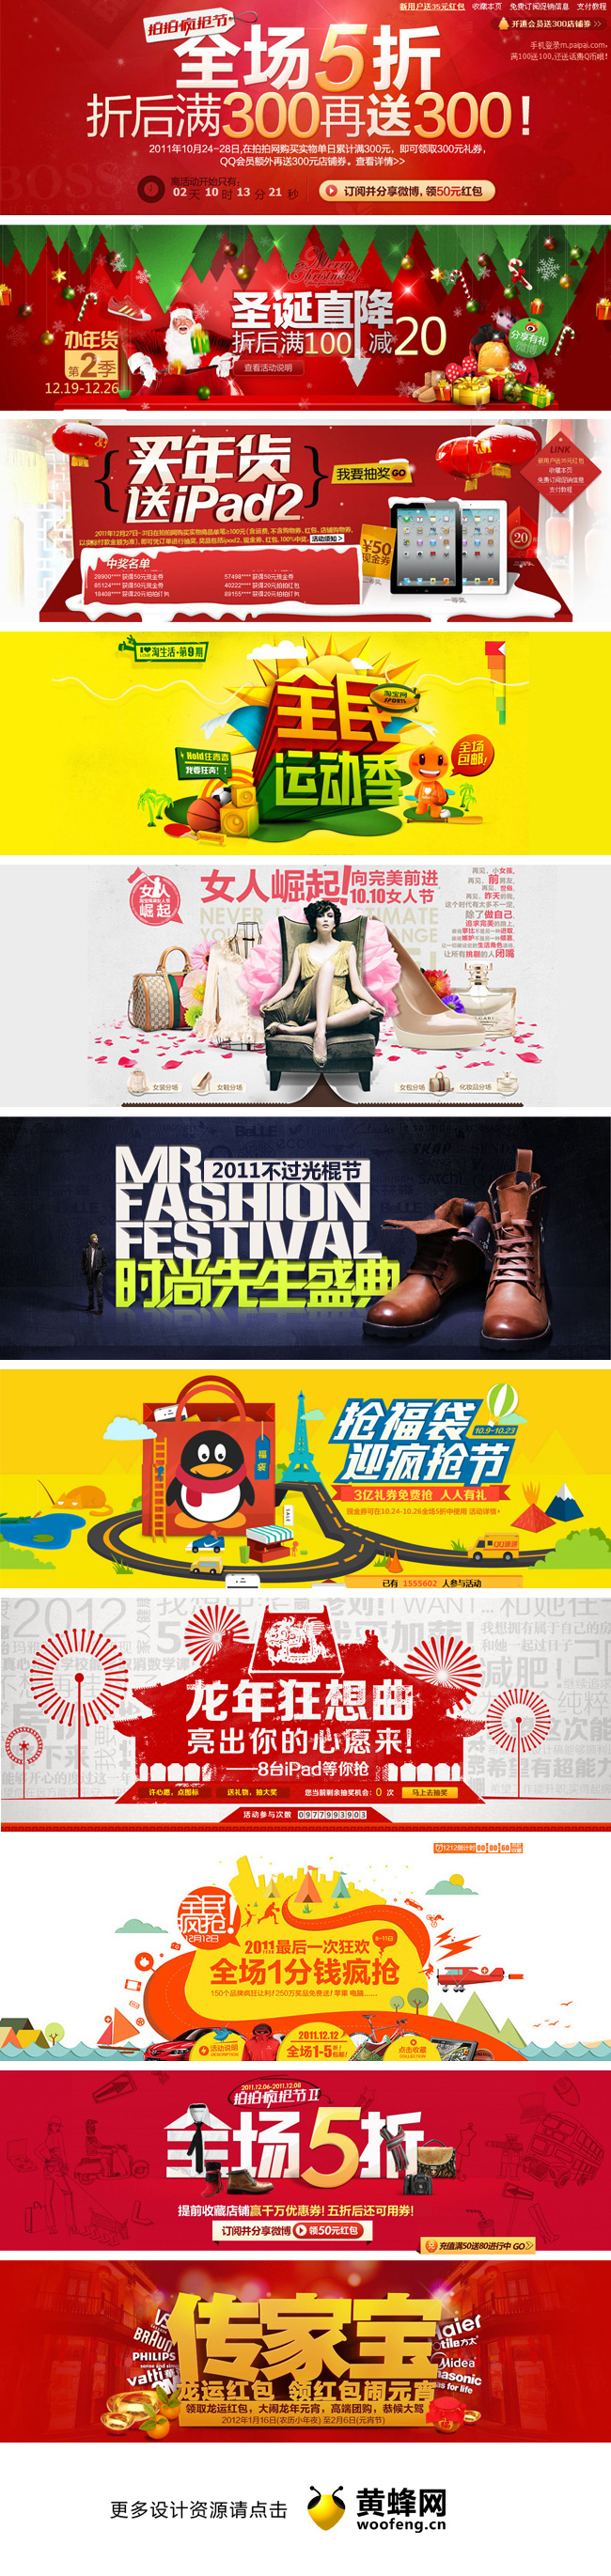 中国电商网站节日Banner设计欣赏，来源自黄蜂网https://woofeng.cn/advertising/